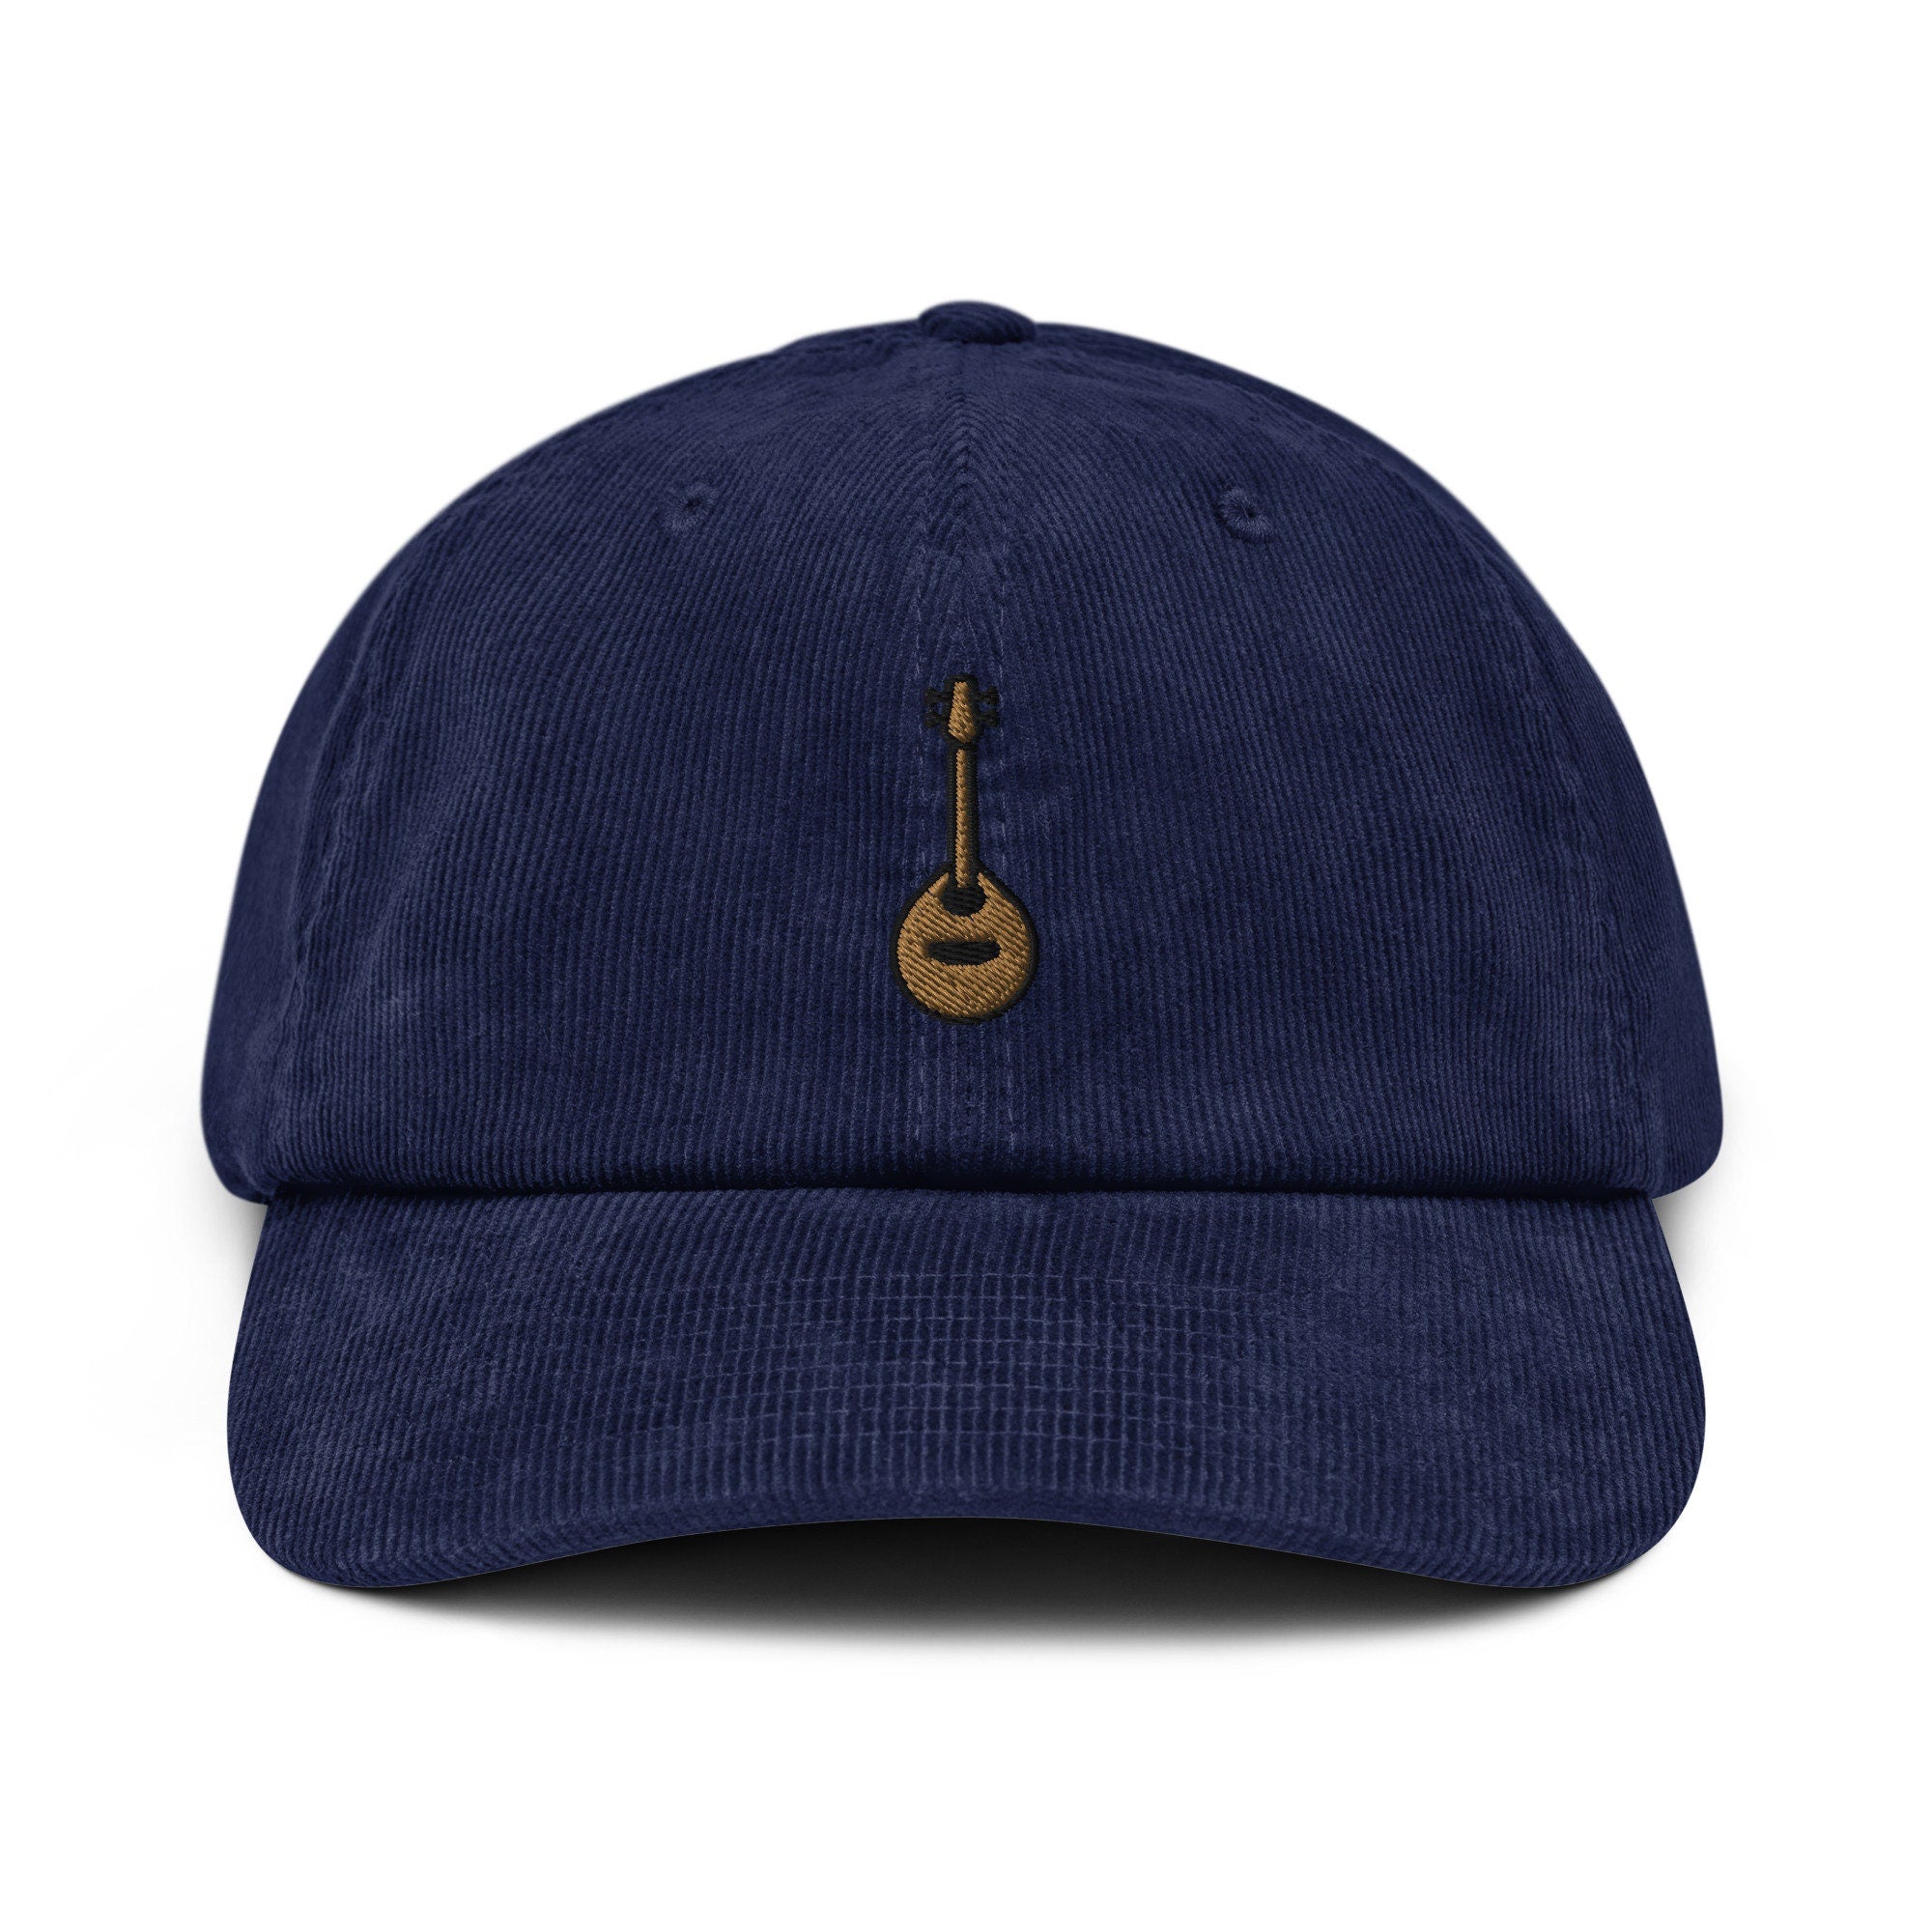 Mandolin Corduroy Hat, Handmade Embroidered Corduroy Dad Cap - Multiple Colors